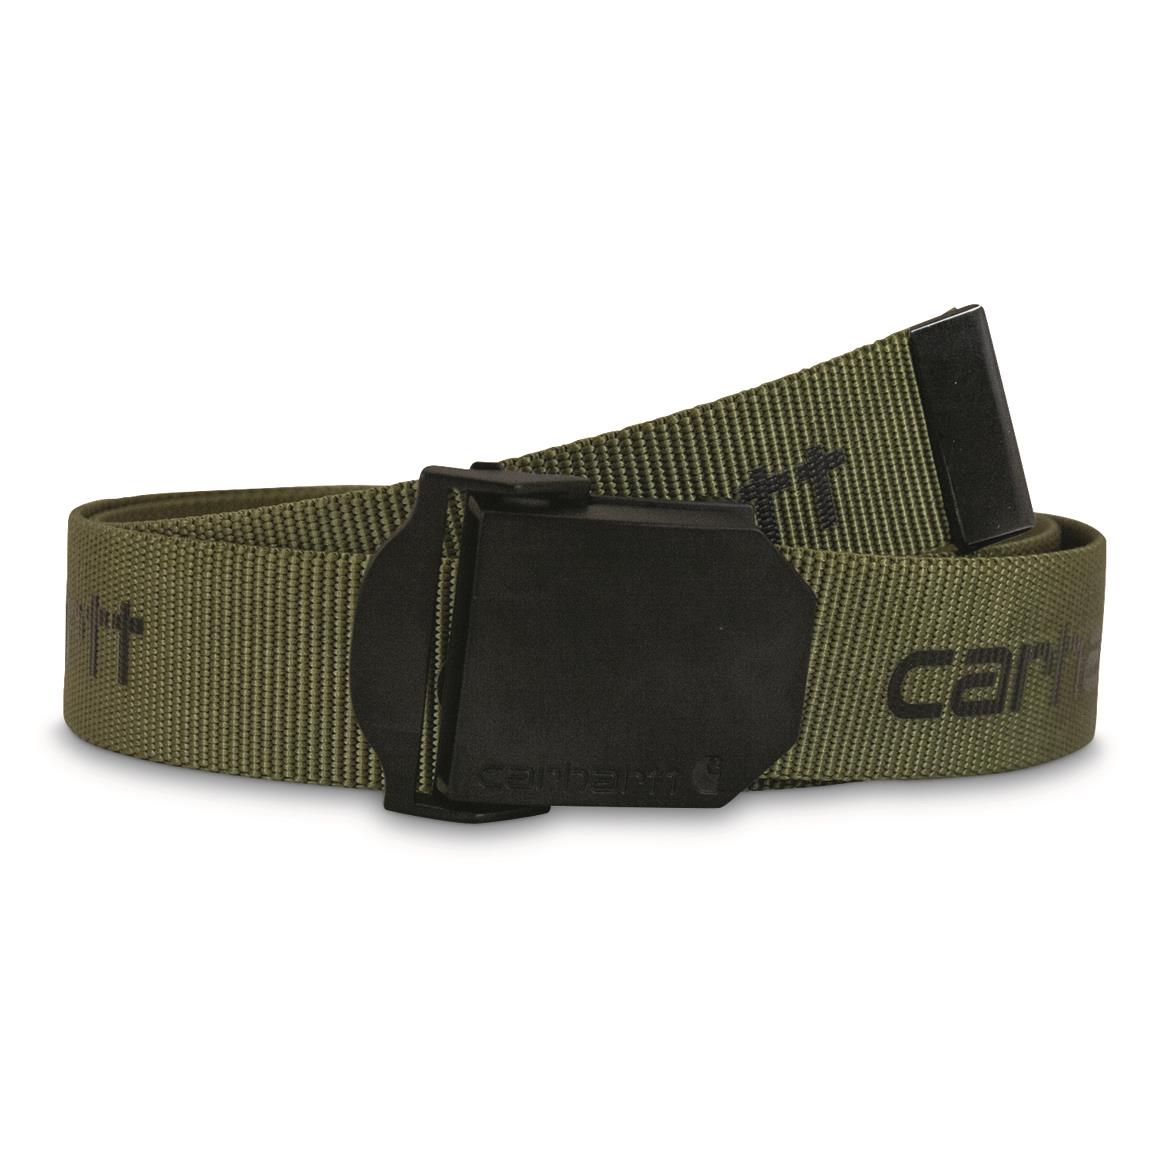 Carhartt Men's Signature Webbing Belt, Army Green